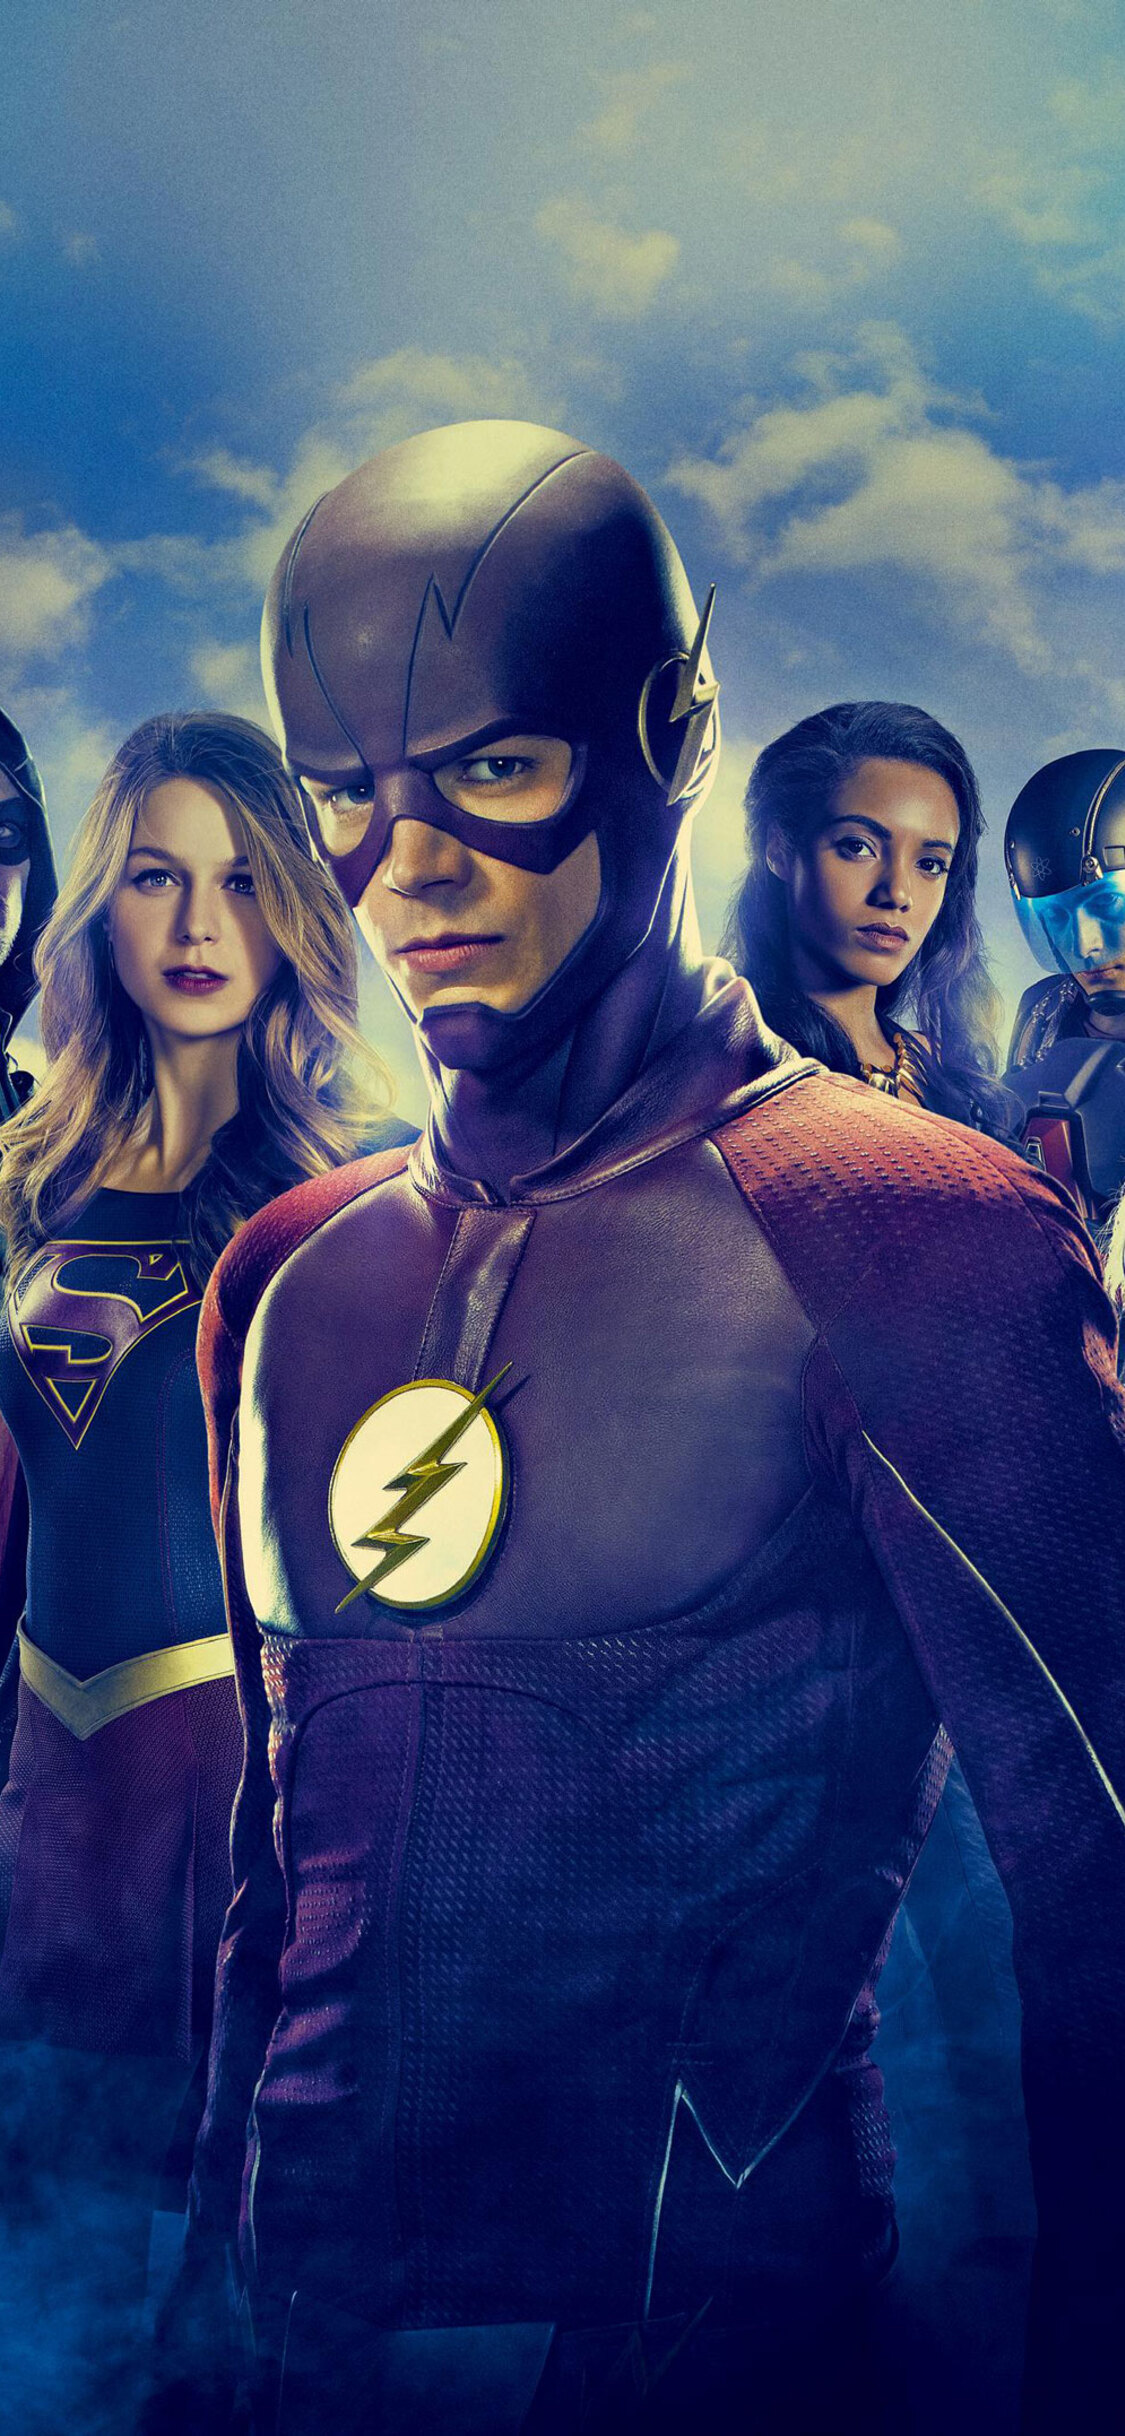 Grant Gustin: Flash, Supergirl, Arrow, TV series, Superheroes, Melissa Benoist as Kara Zor-El. 1130x2440 HD Wallpaper.